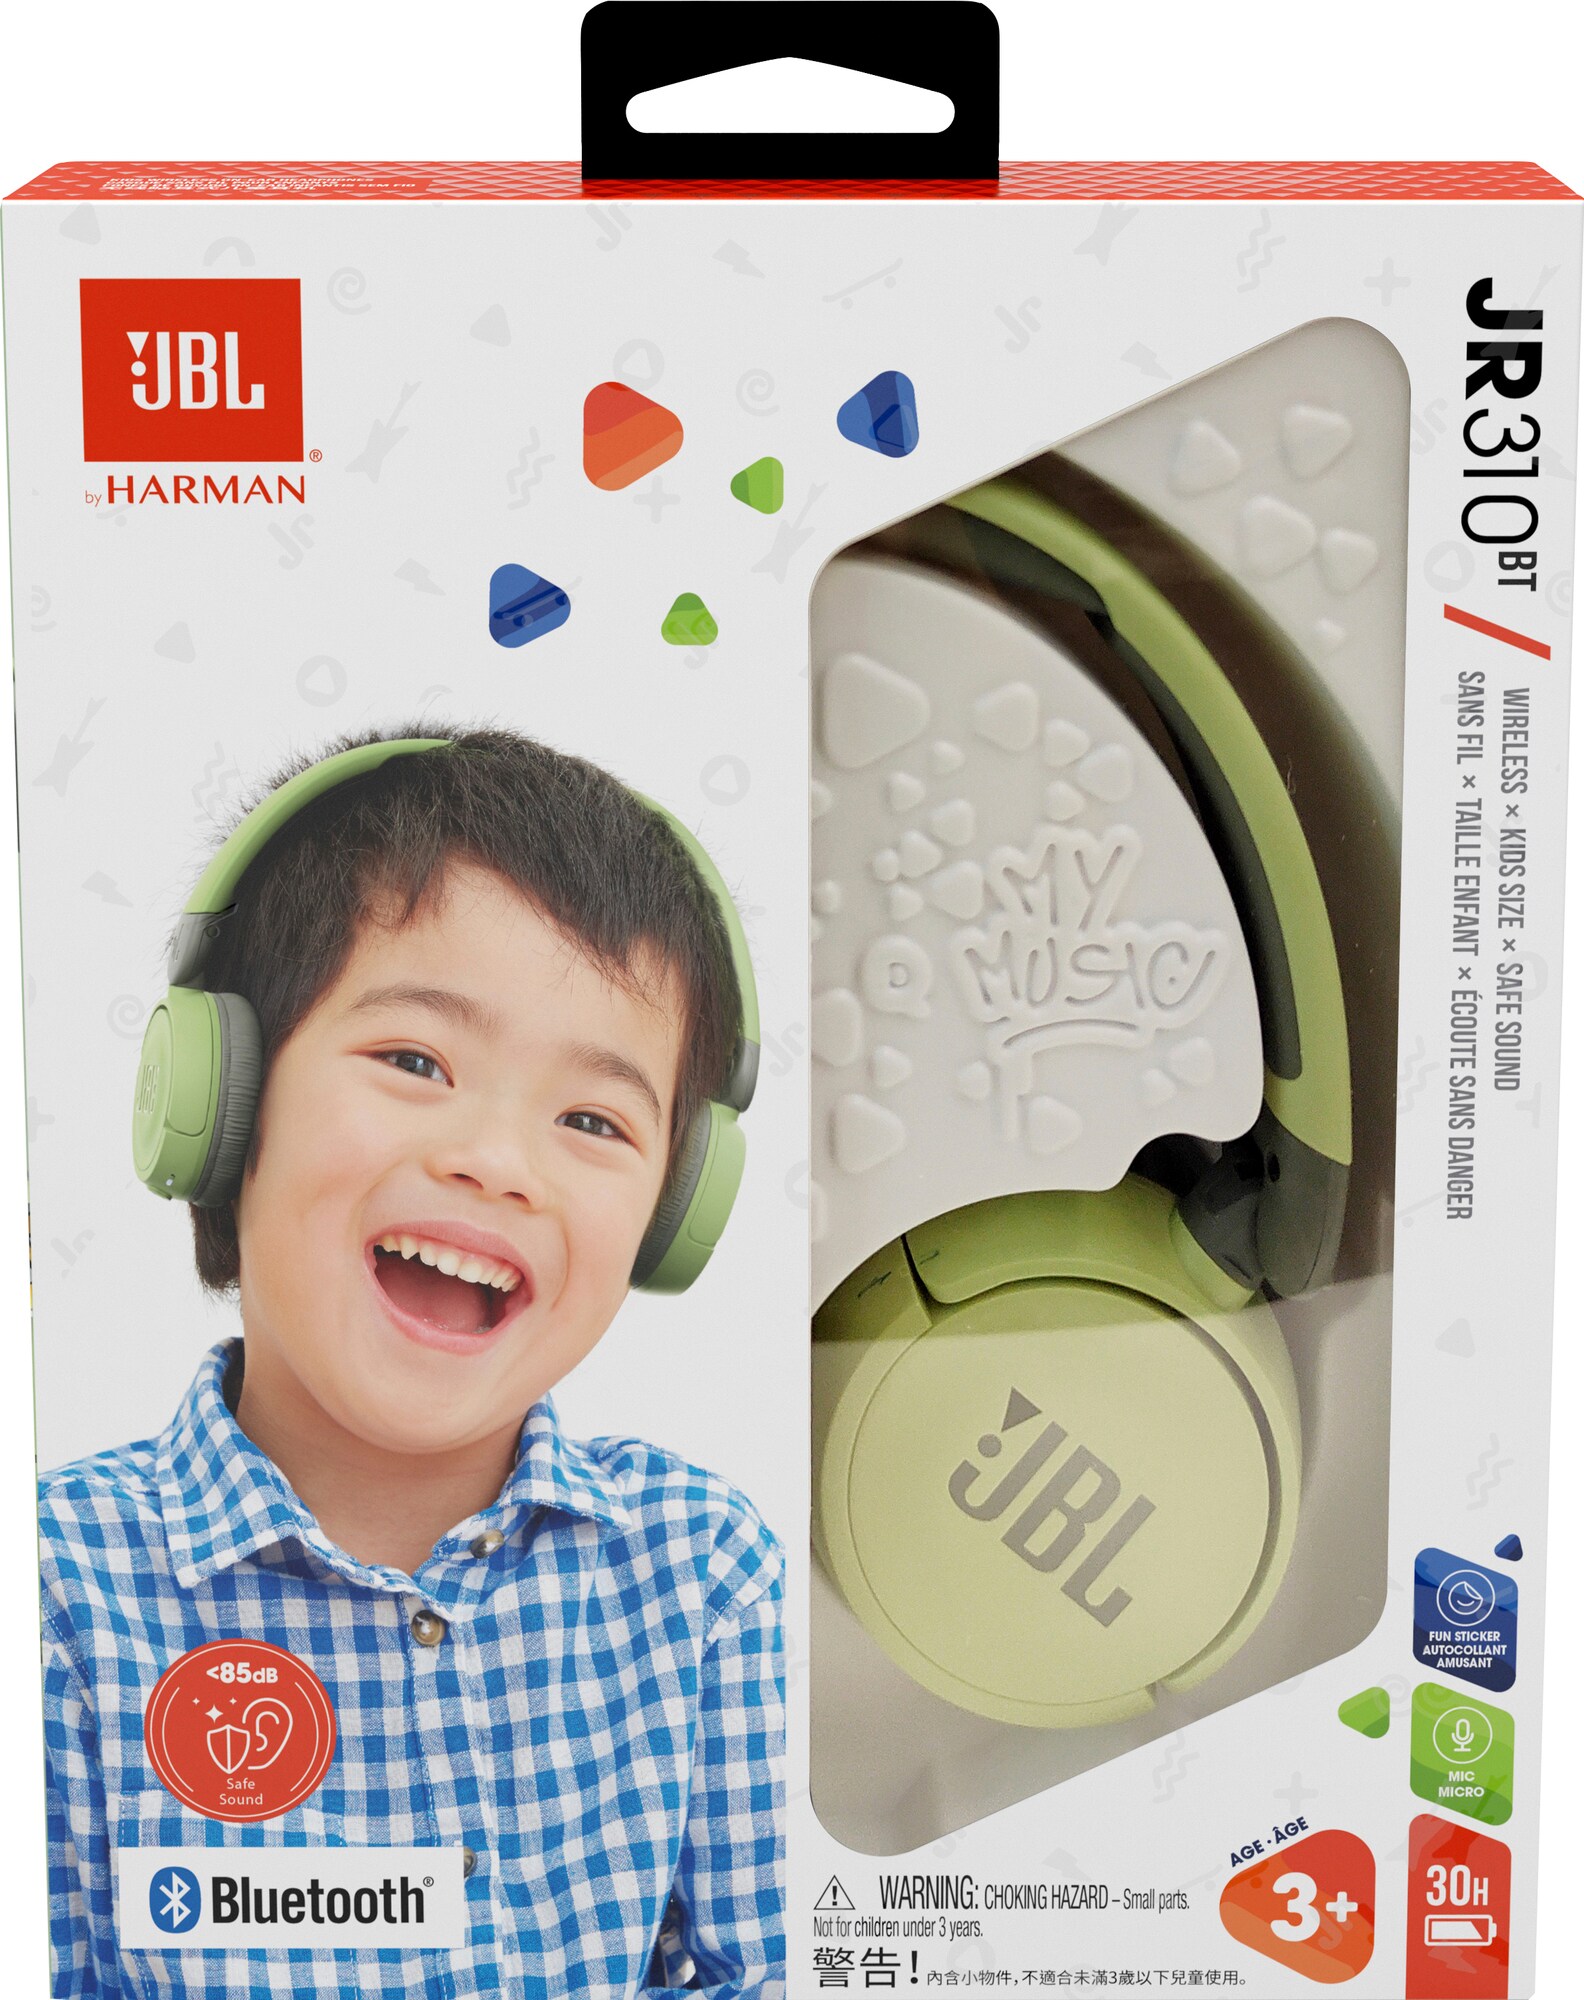 JBL Jr. 310BT trådlösa on-ear hörlurar (grön) - Hörlurar - Elgiganten